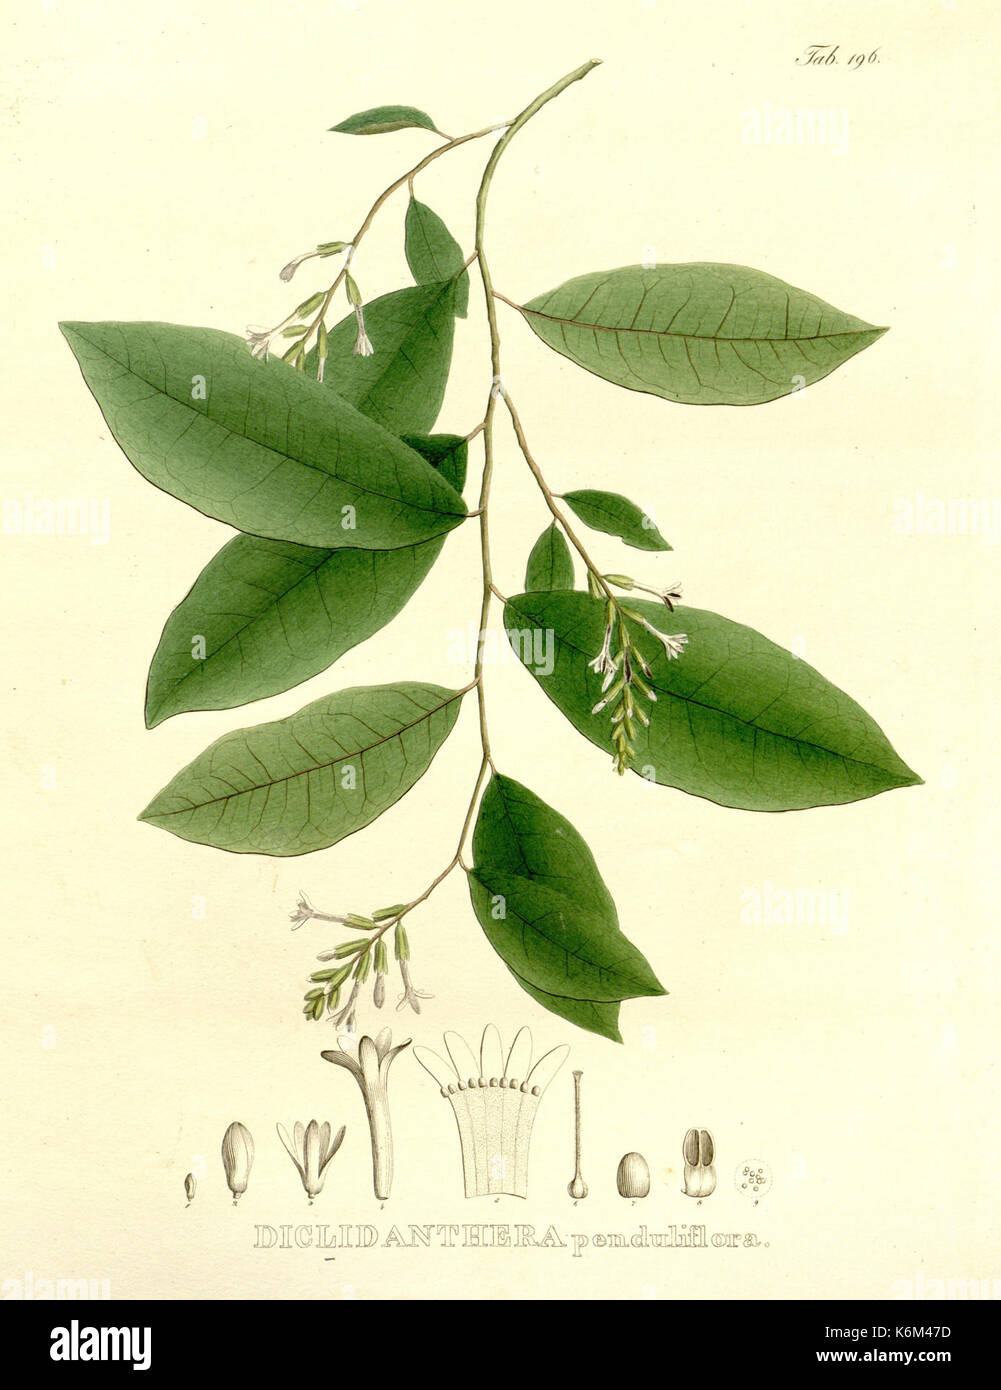 Diclidanthera penduliflora Martius Nov. Gen. Sp. Pl. 2, t. 196 Stock Photo